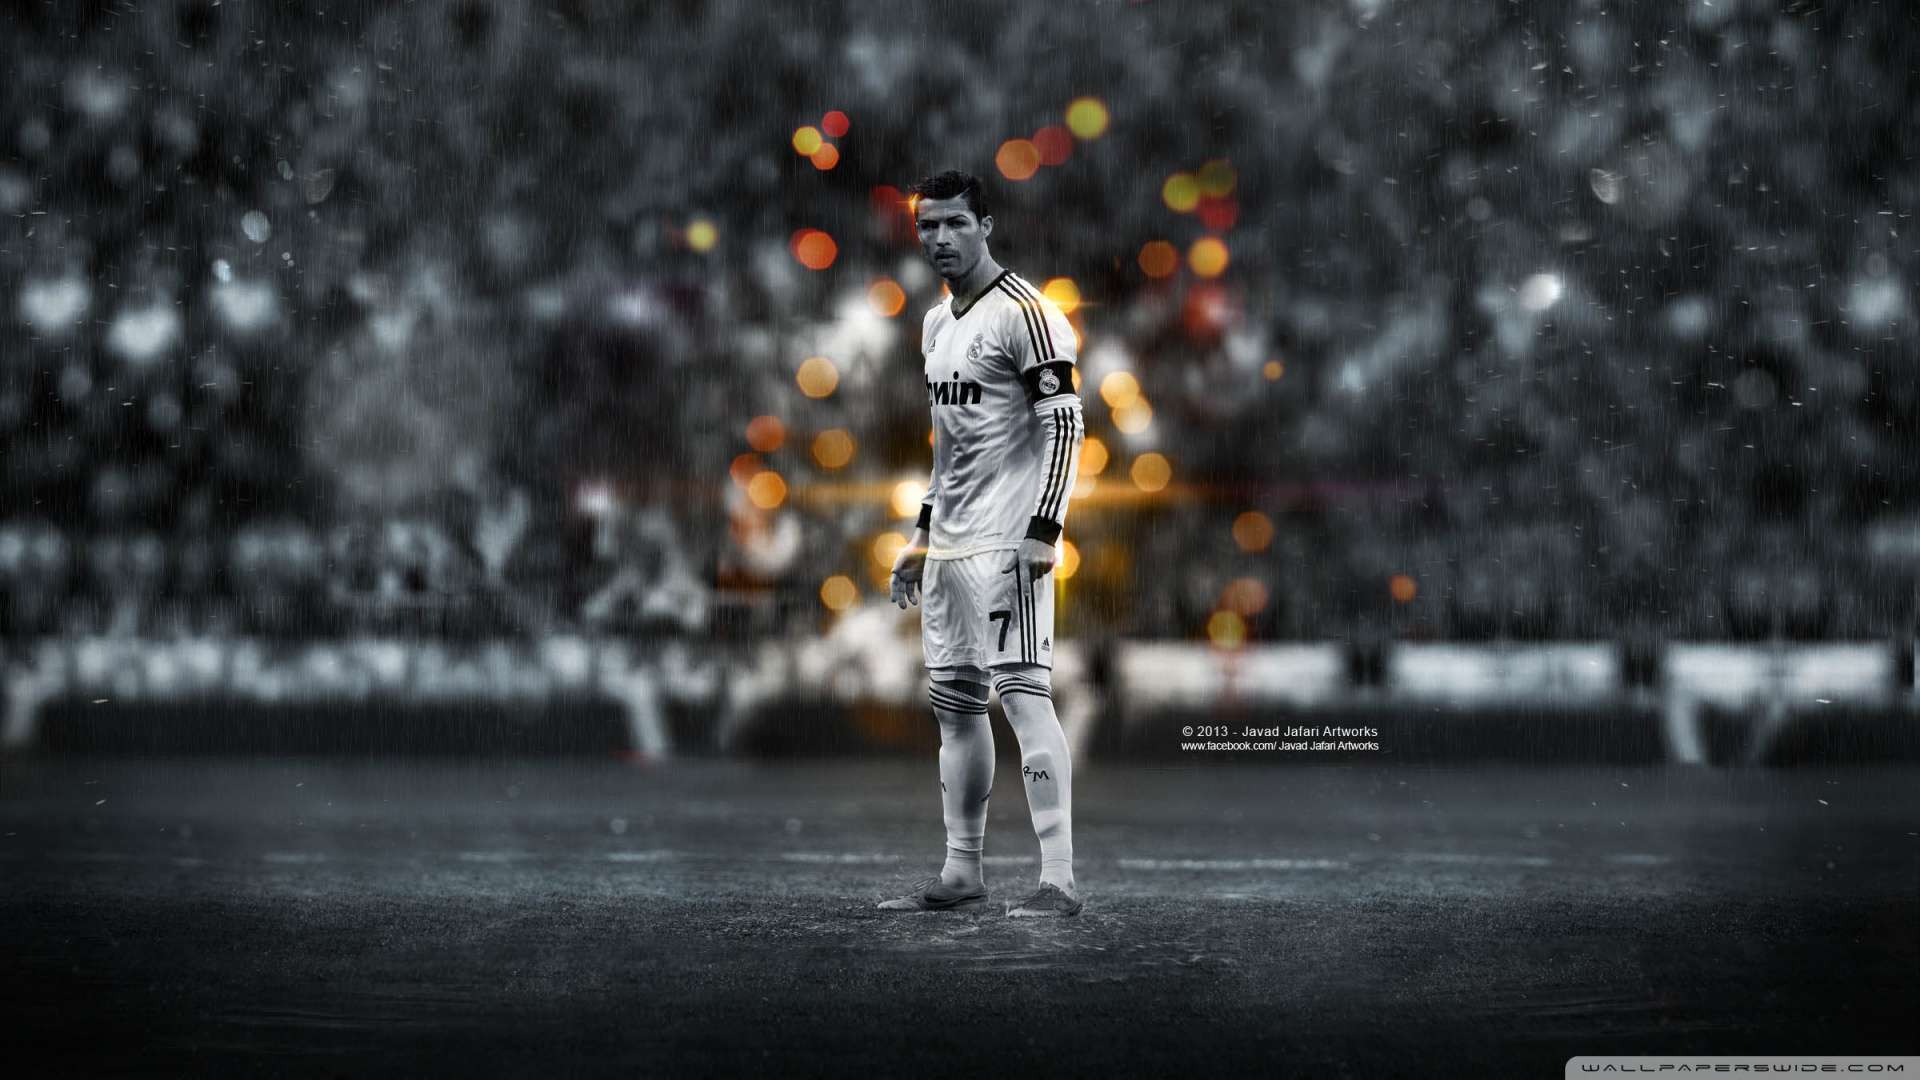 43+] Cristiano Ronaldo Wallpaper 1080p - WallpaperSafari